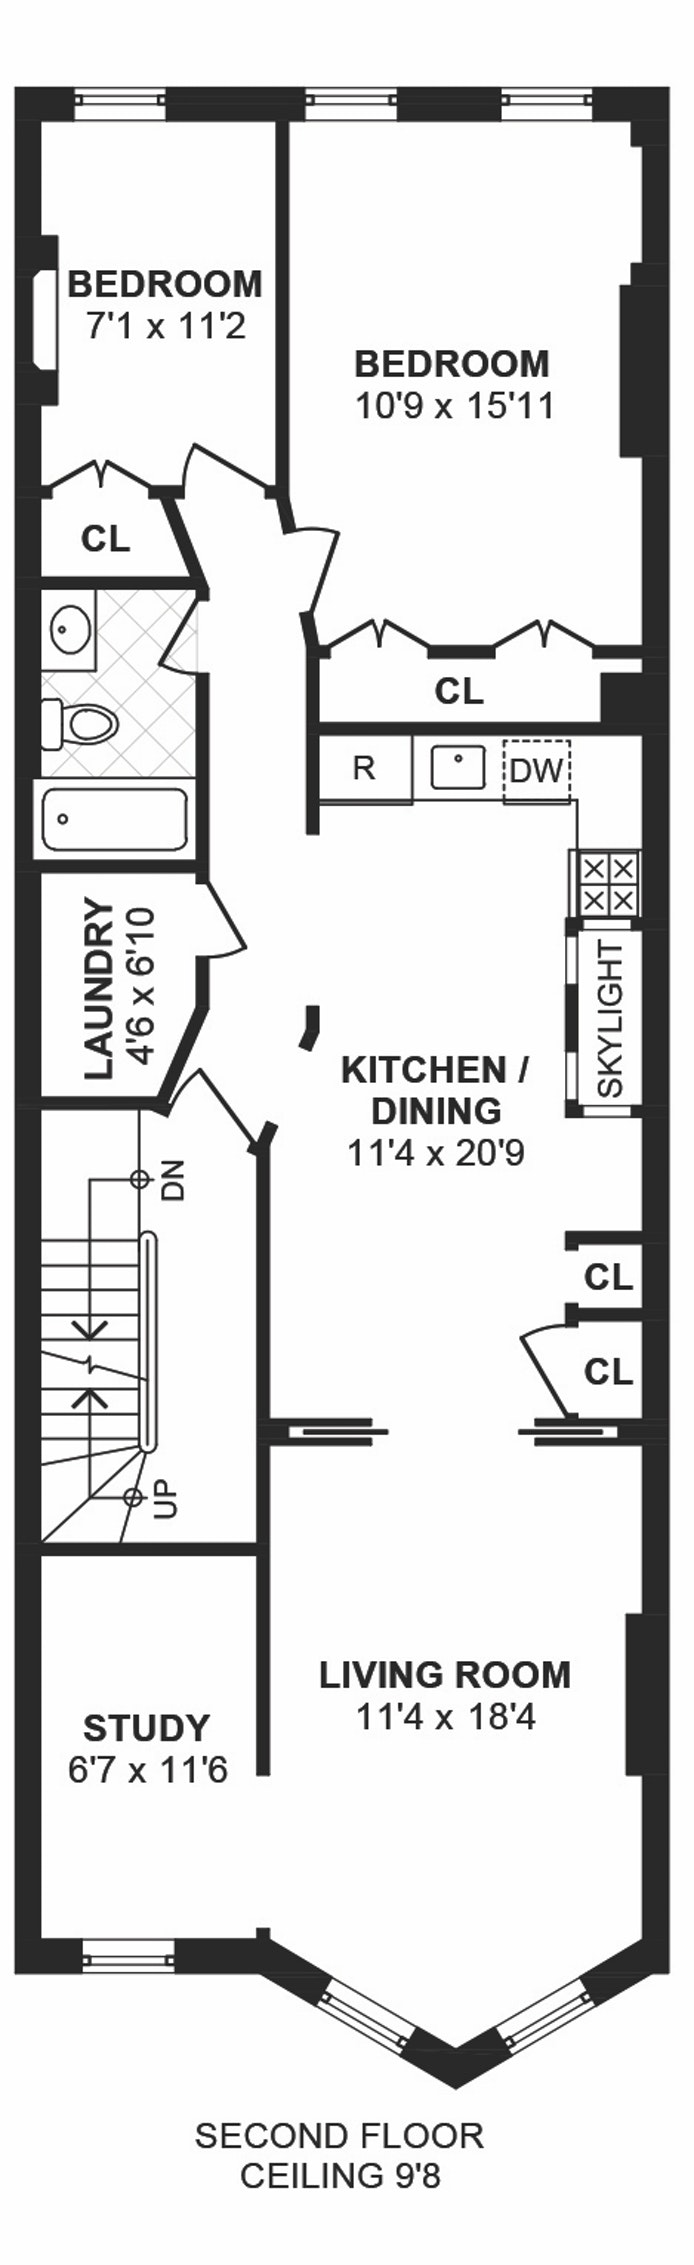 Floorplan for 165 Monroe Street, 2